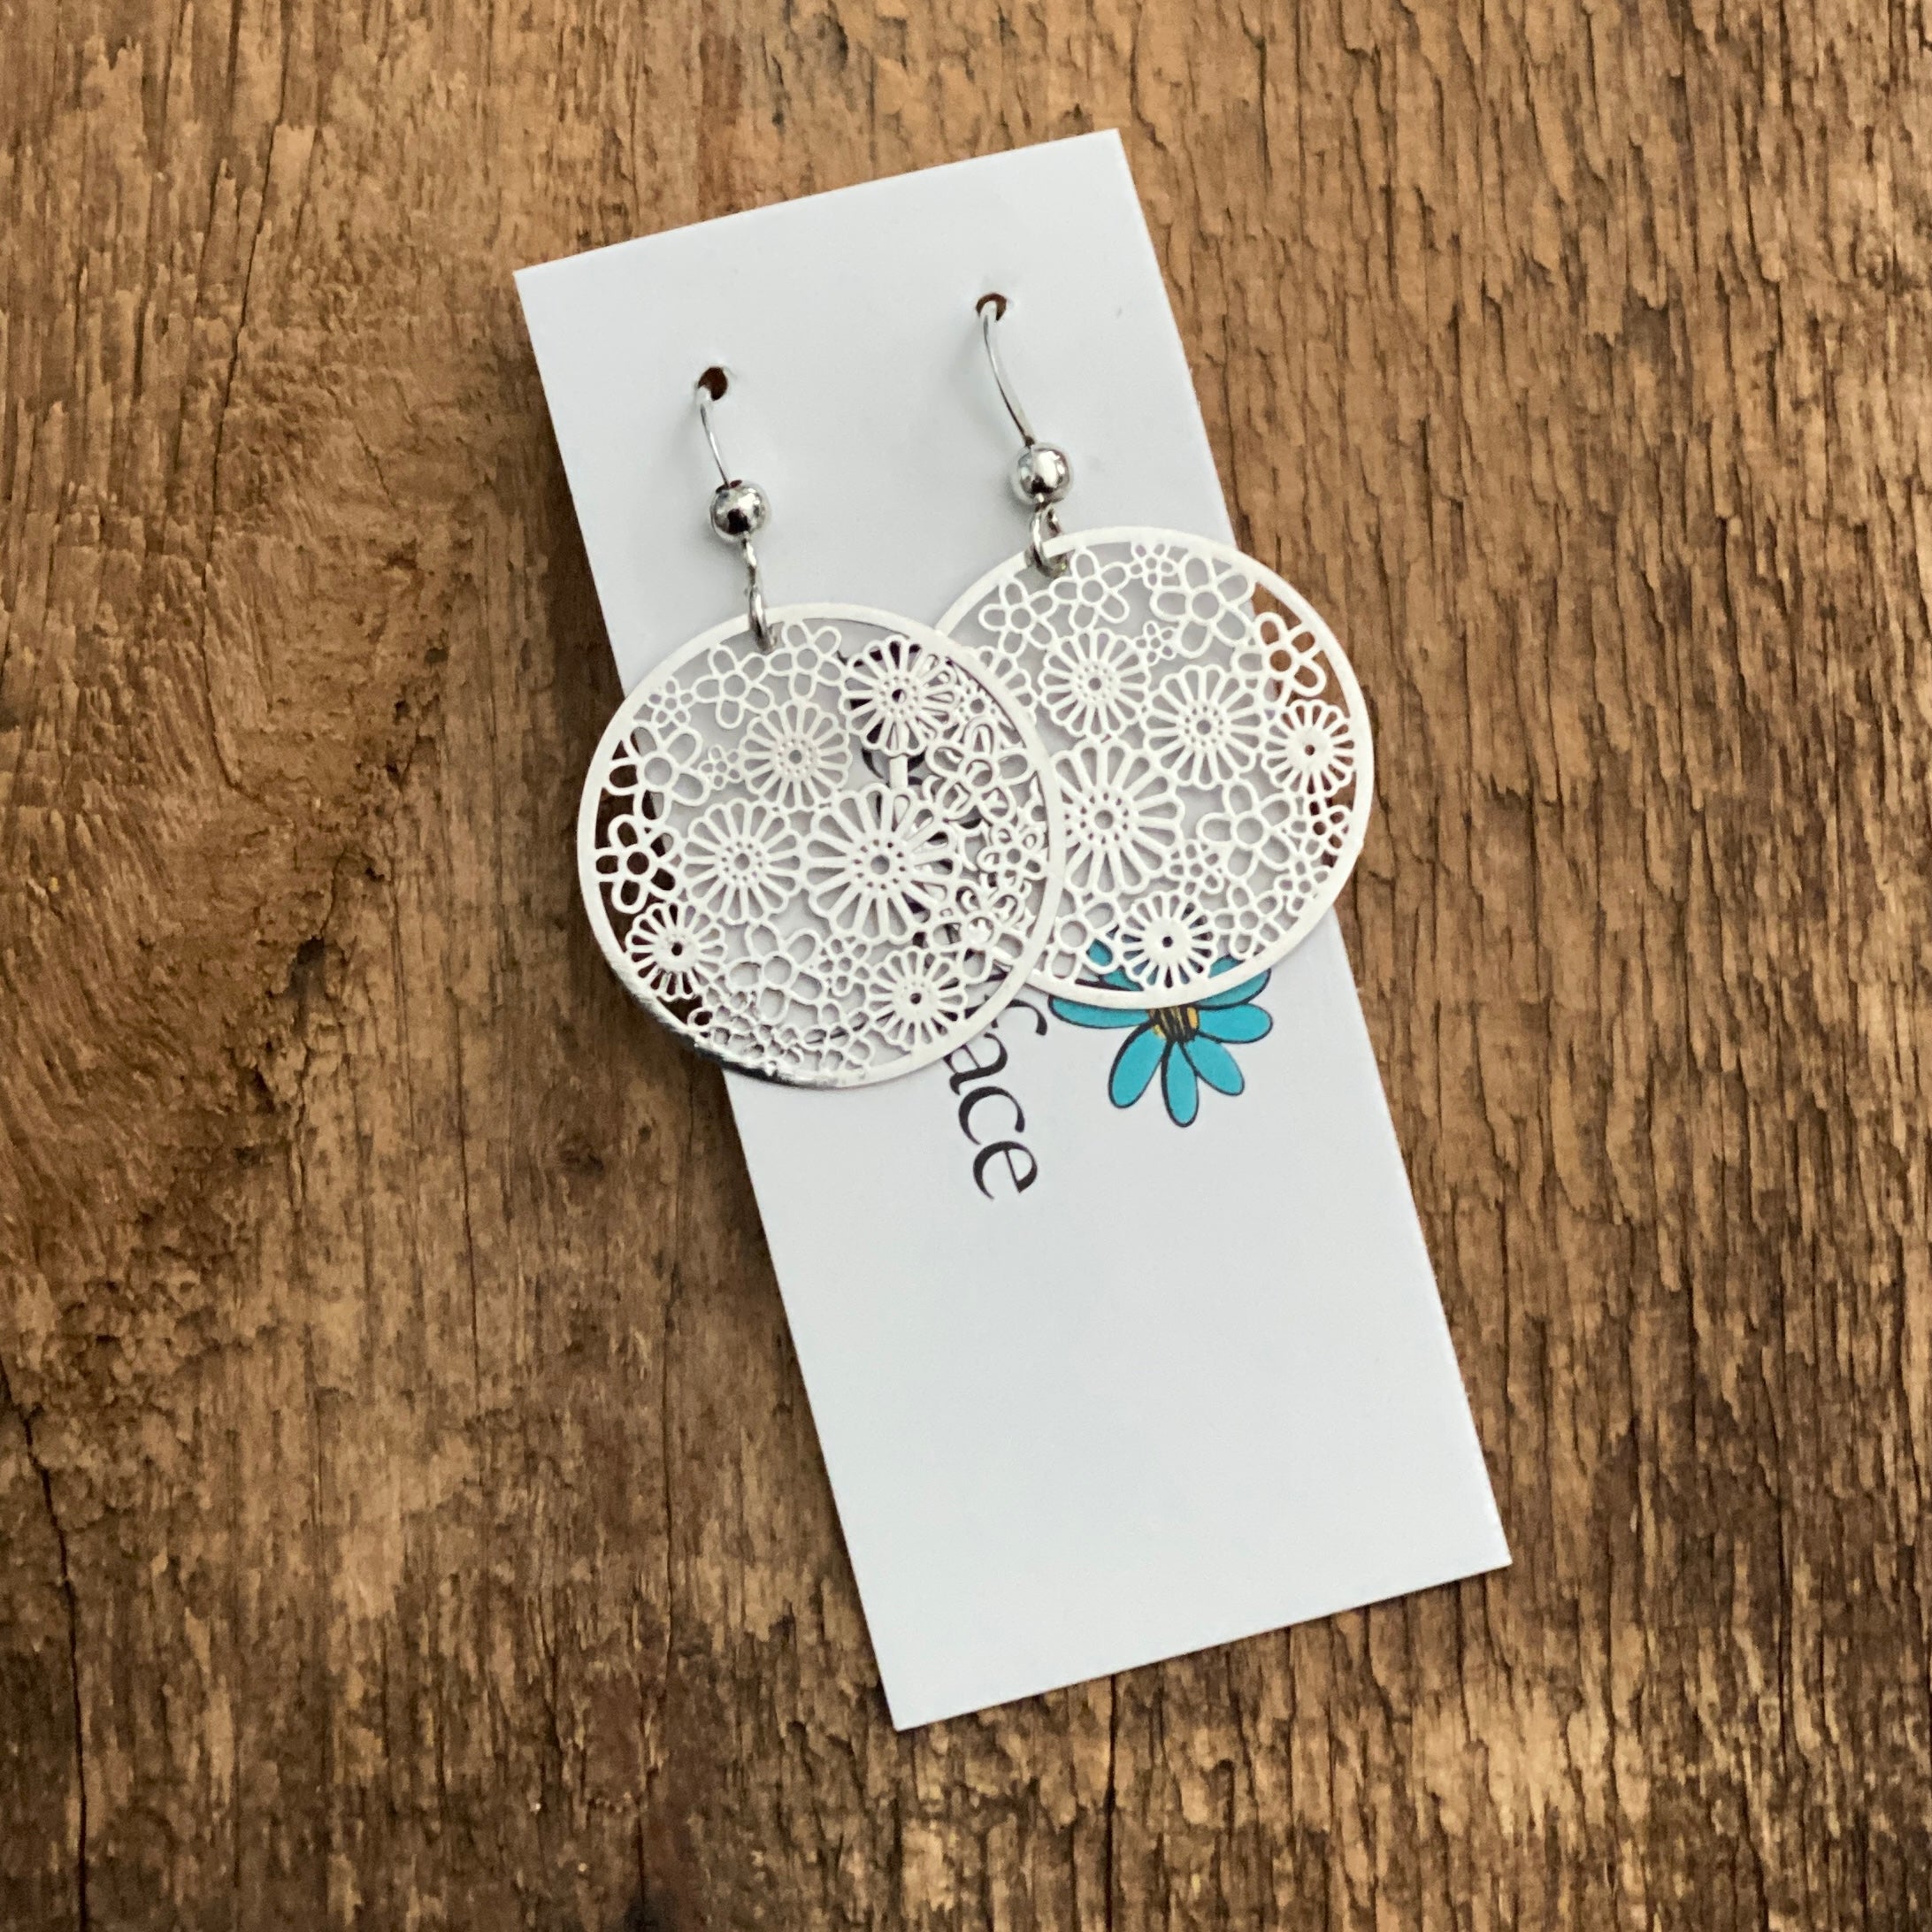 Flower Collage Hook earrings